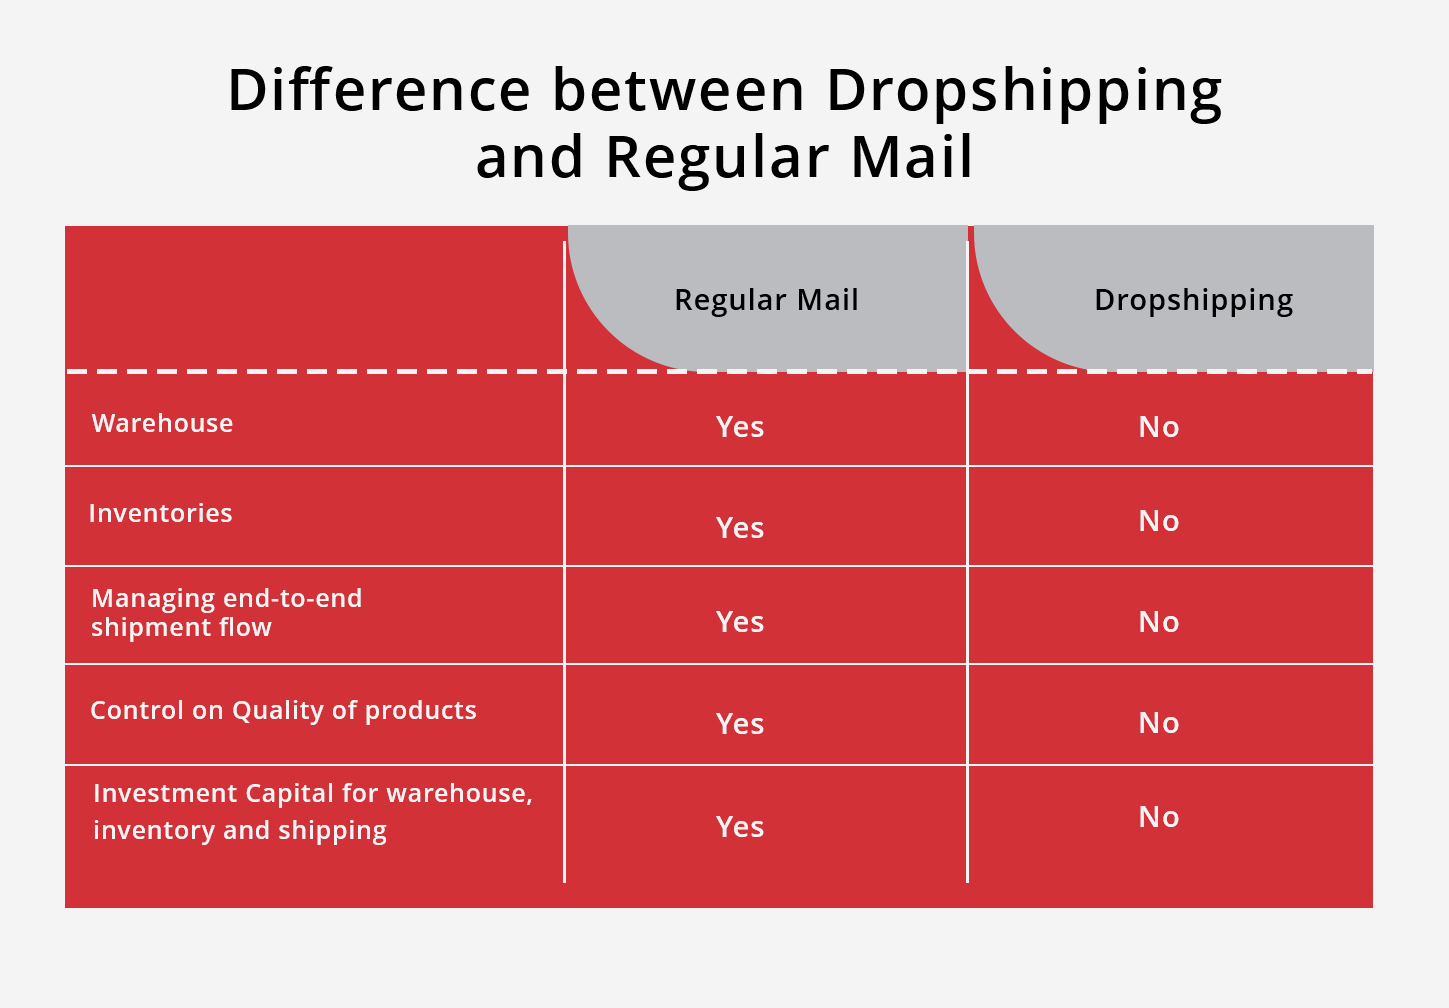 Dropshipping and Regular Mail